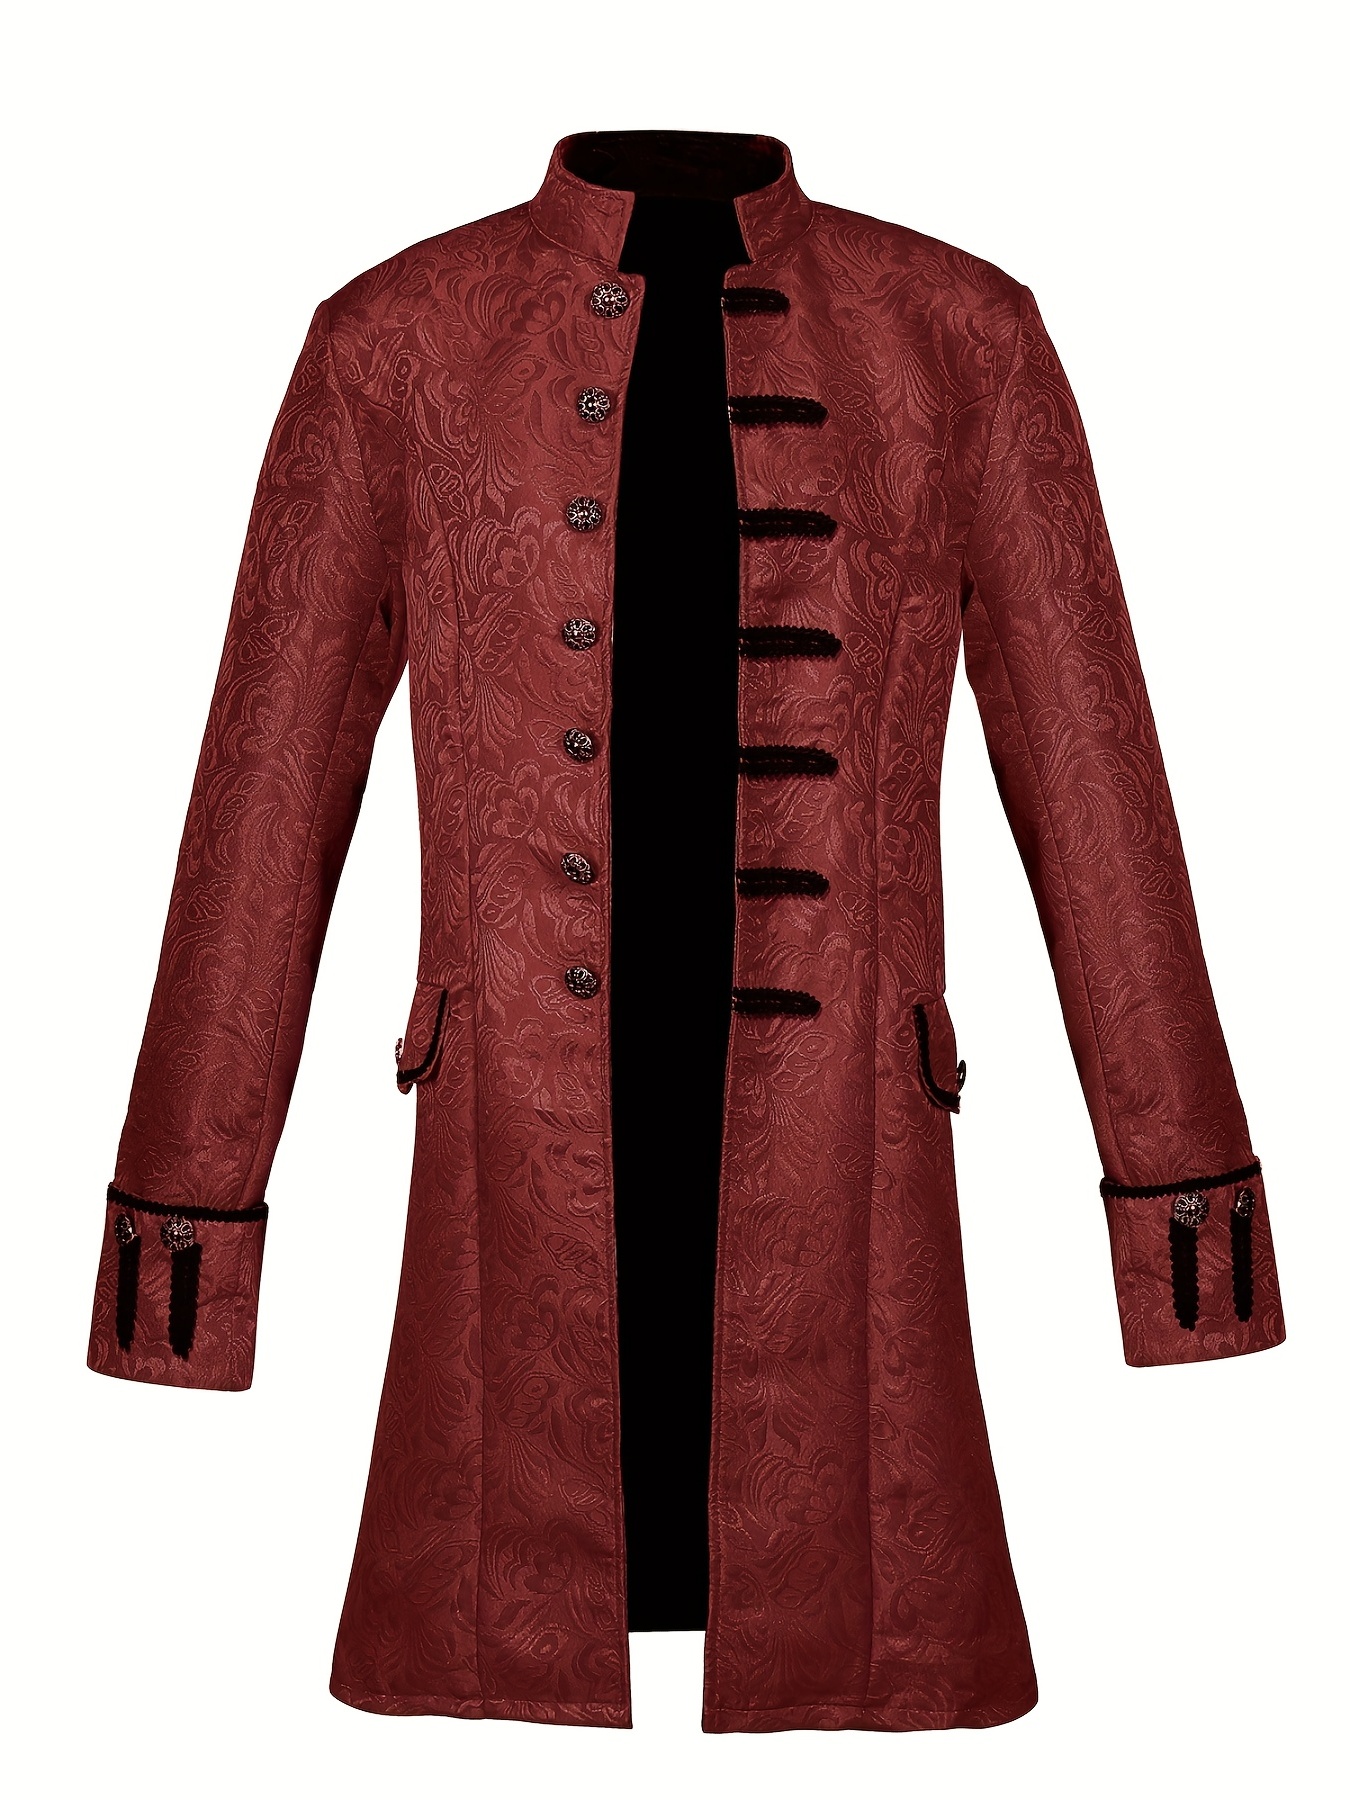 Men Steampunk Costume Jacket Vintage Overcoat Medieval Costume